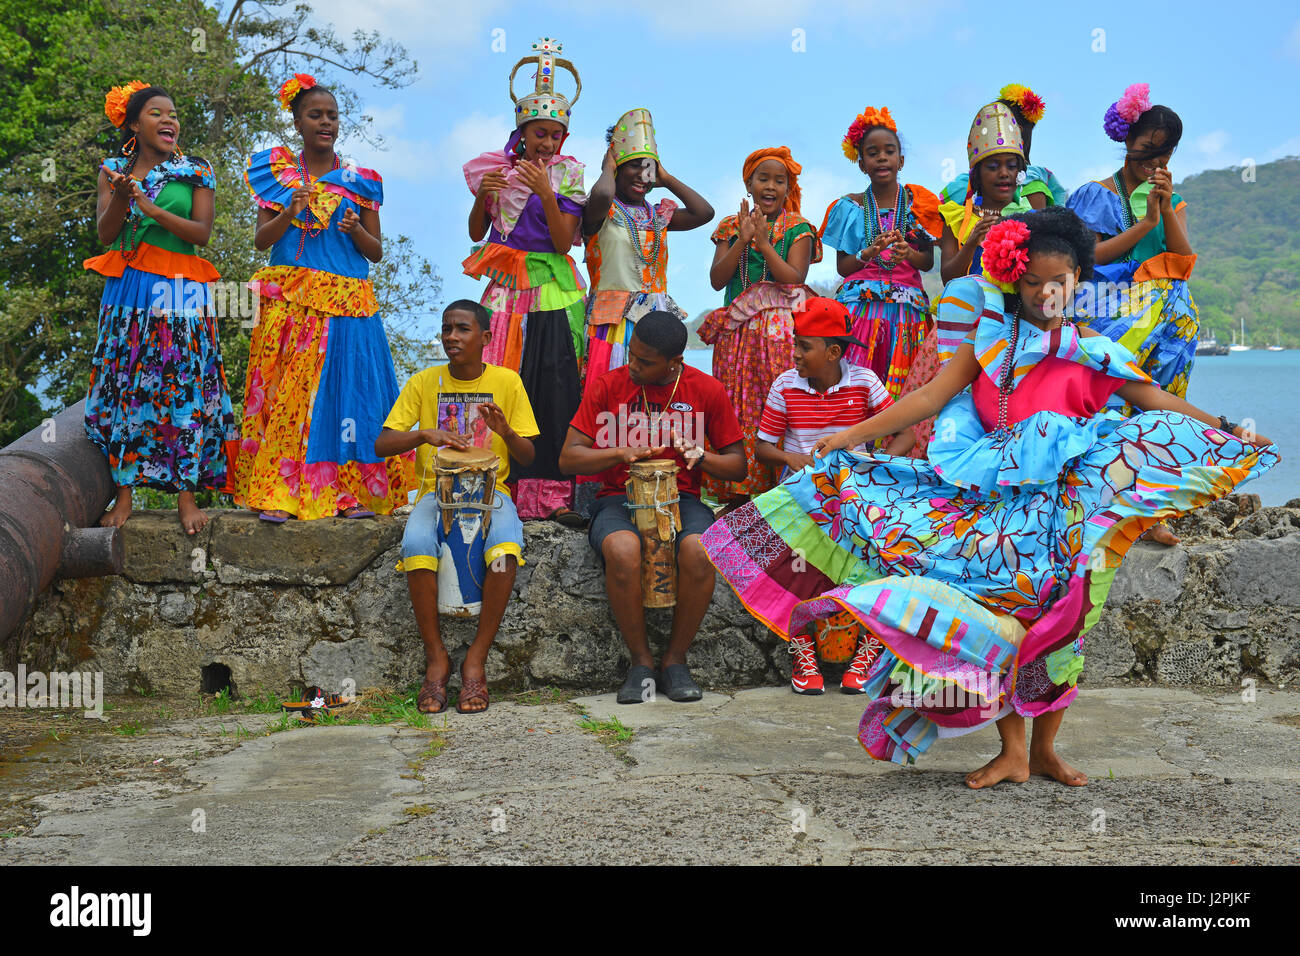 Traditional congo dance performance inside the Spanish fortress of Santiago in Portobelo, Panama. The panamanian dancers wear traditional clothing. Stock Photo